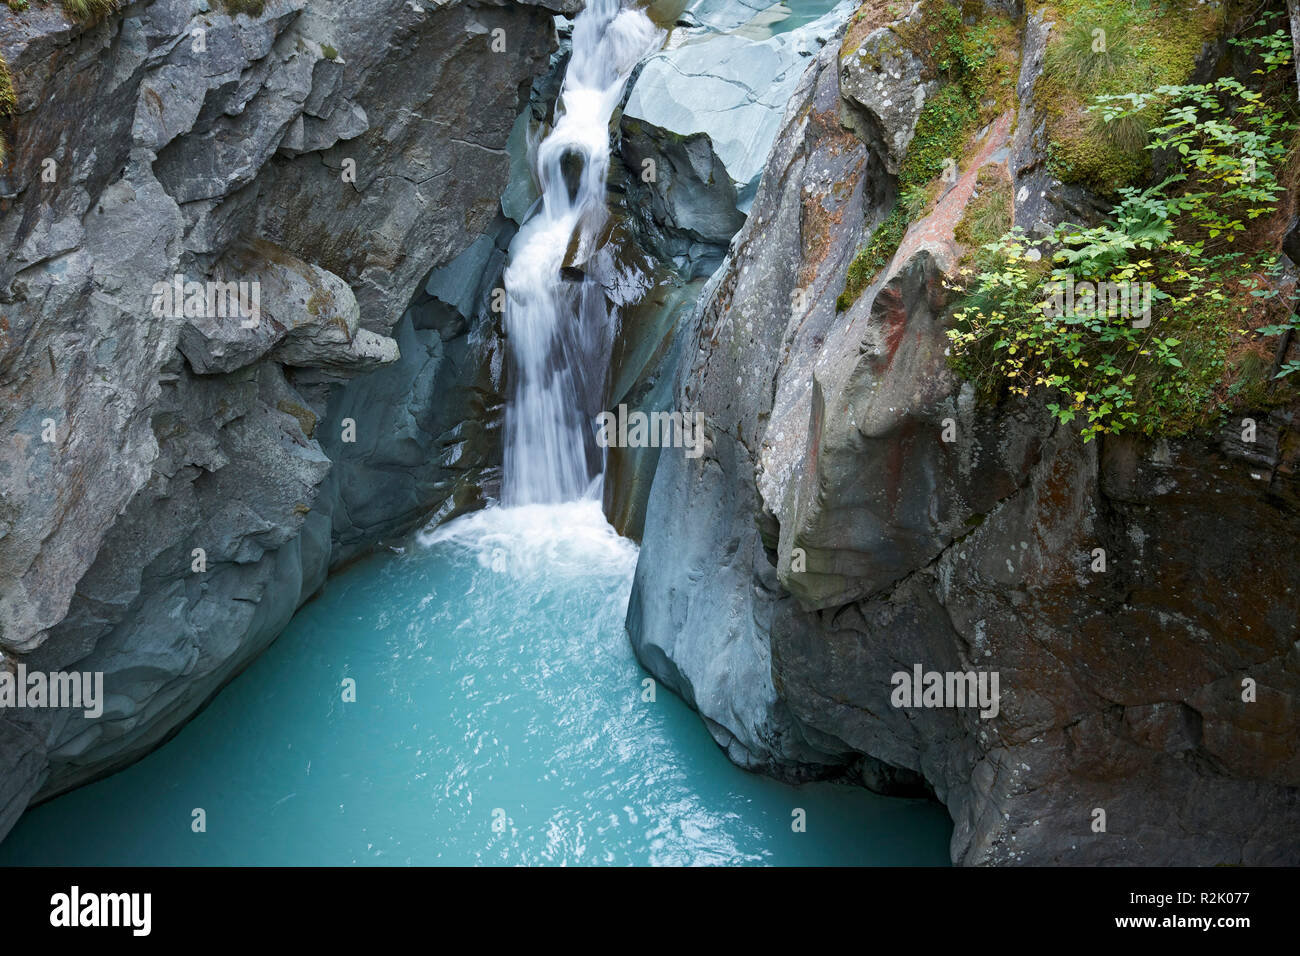 La cascata nel Gorner gorge a Zermatt. Foto Stock